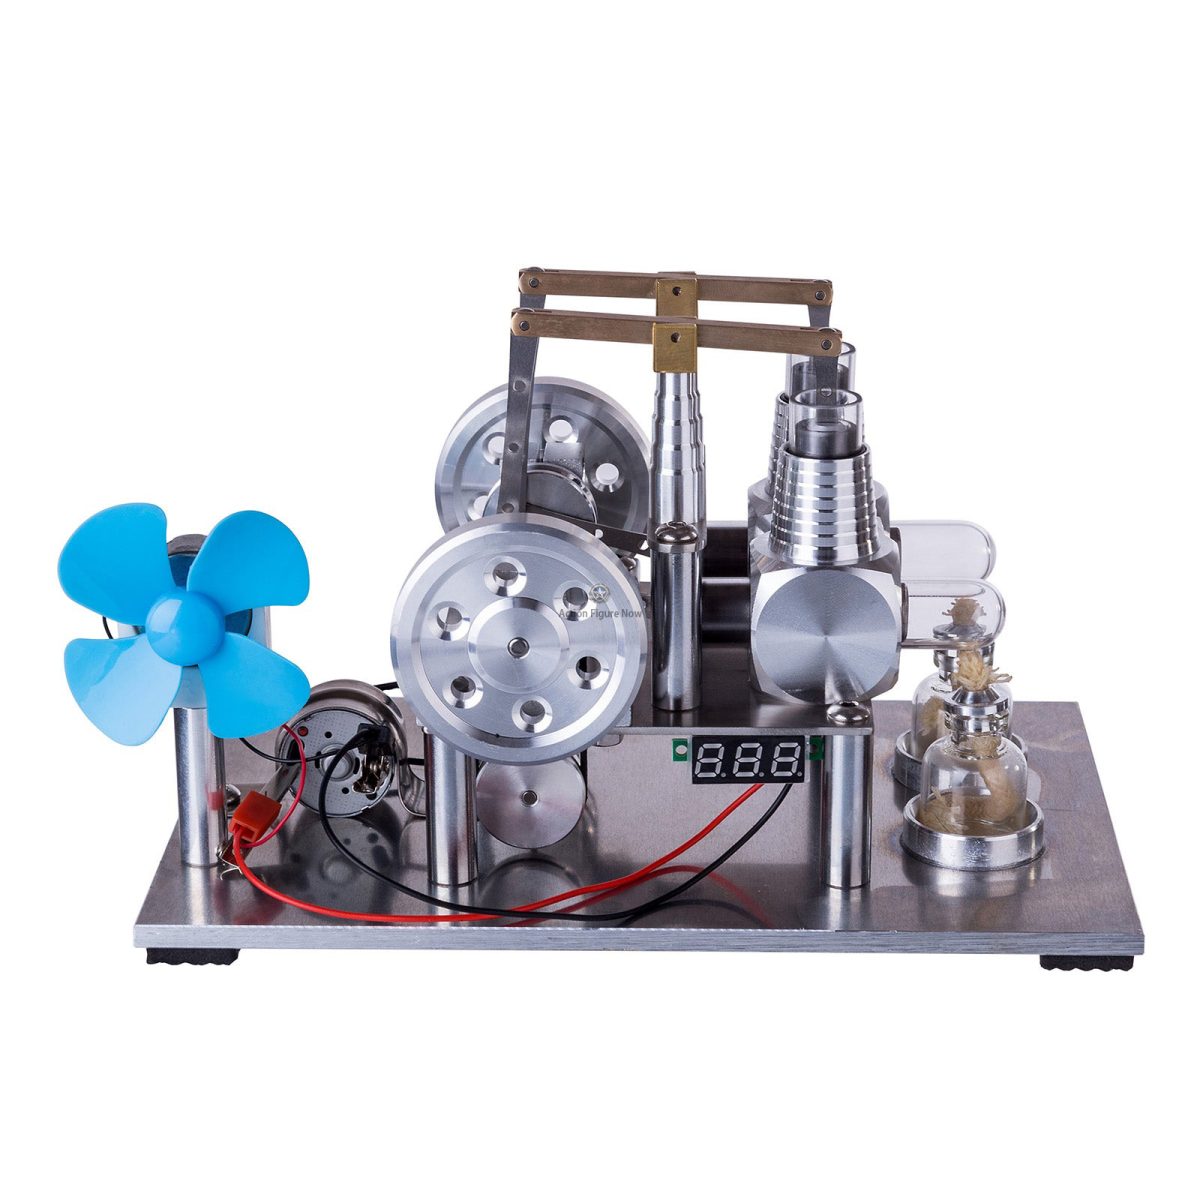 ENJOMOR Balance Type 2-Cylinder Hot Air Stirling Engine Electricity Generator with Voltmeter, Light Bulb, and Fan